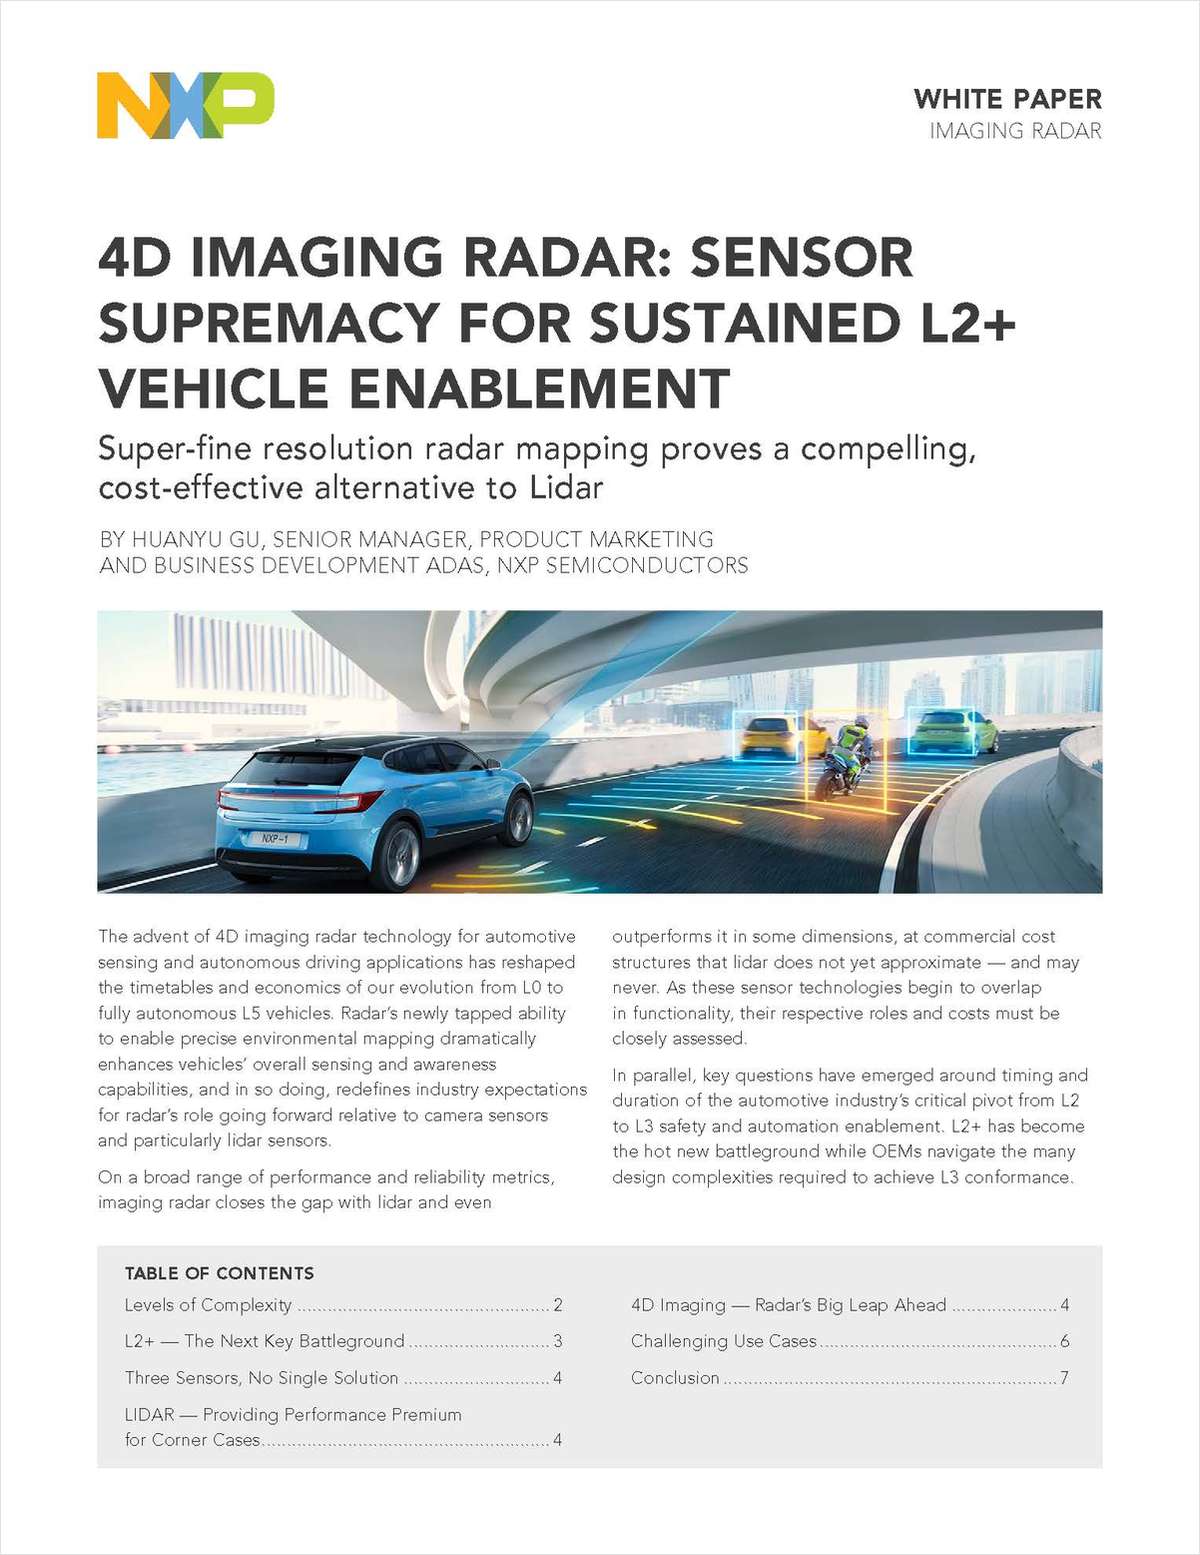 Navigating the Future: The Rise of 4D Imaging Radar in Autonomous Driving